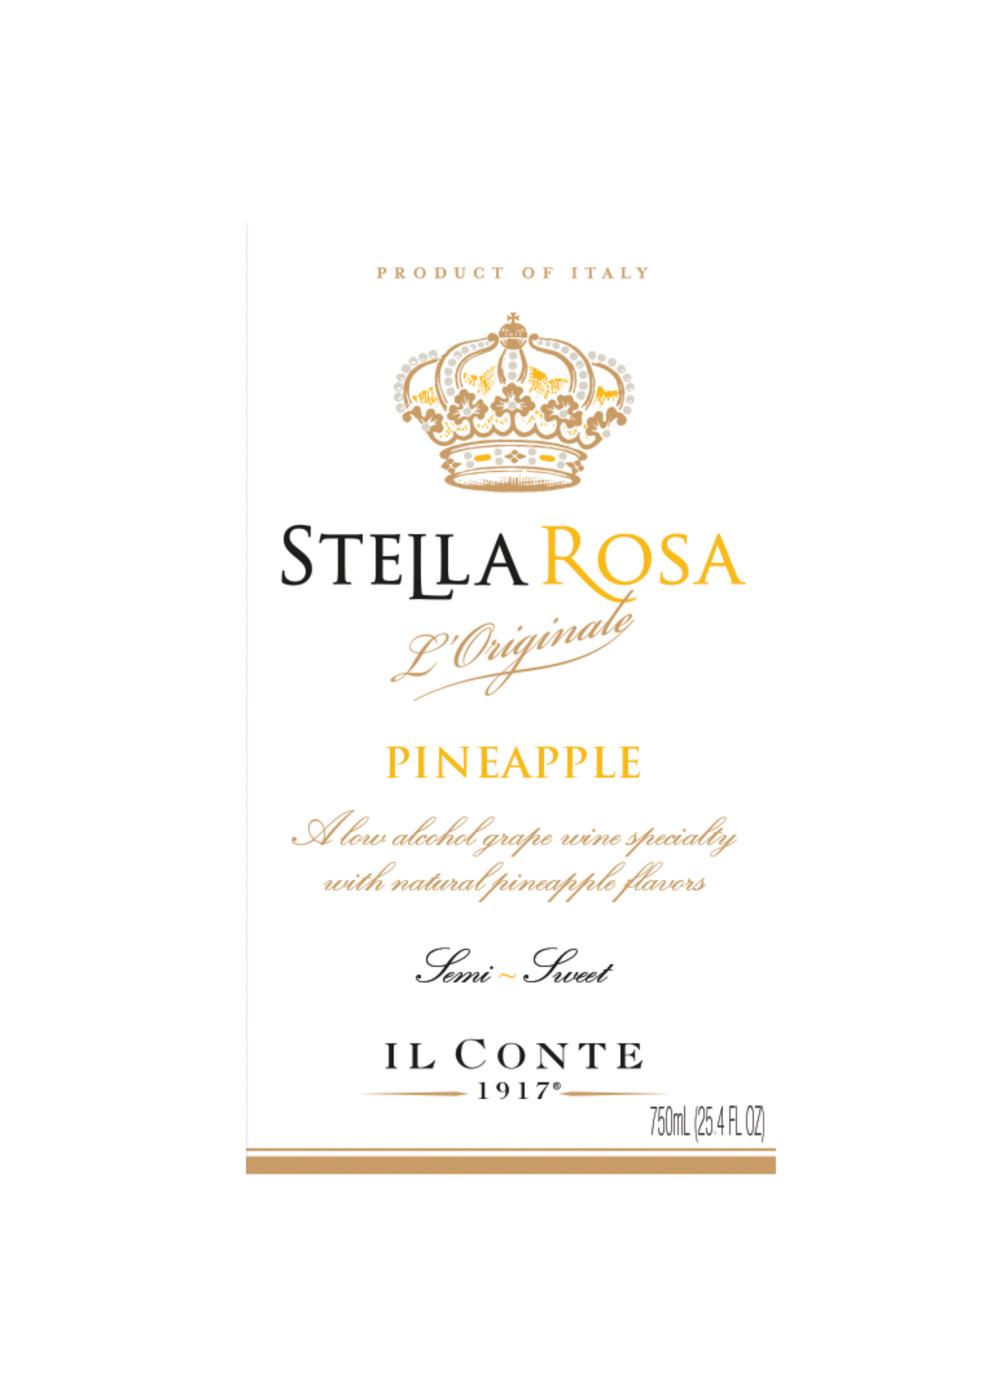 Stella Rosa Pineapple; image 5 of 7